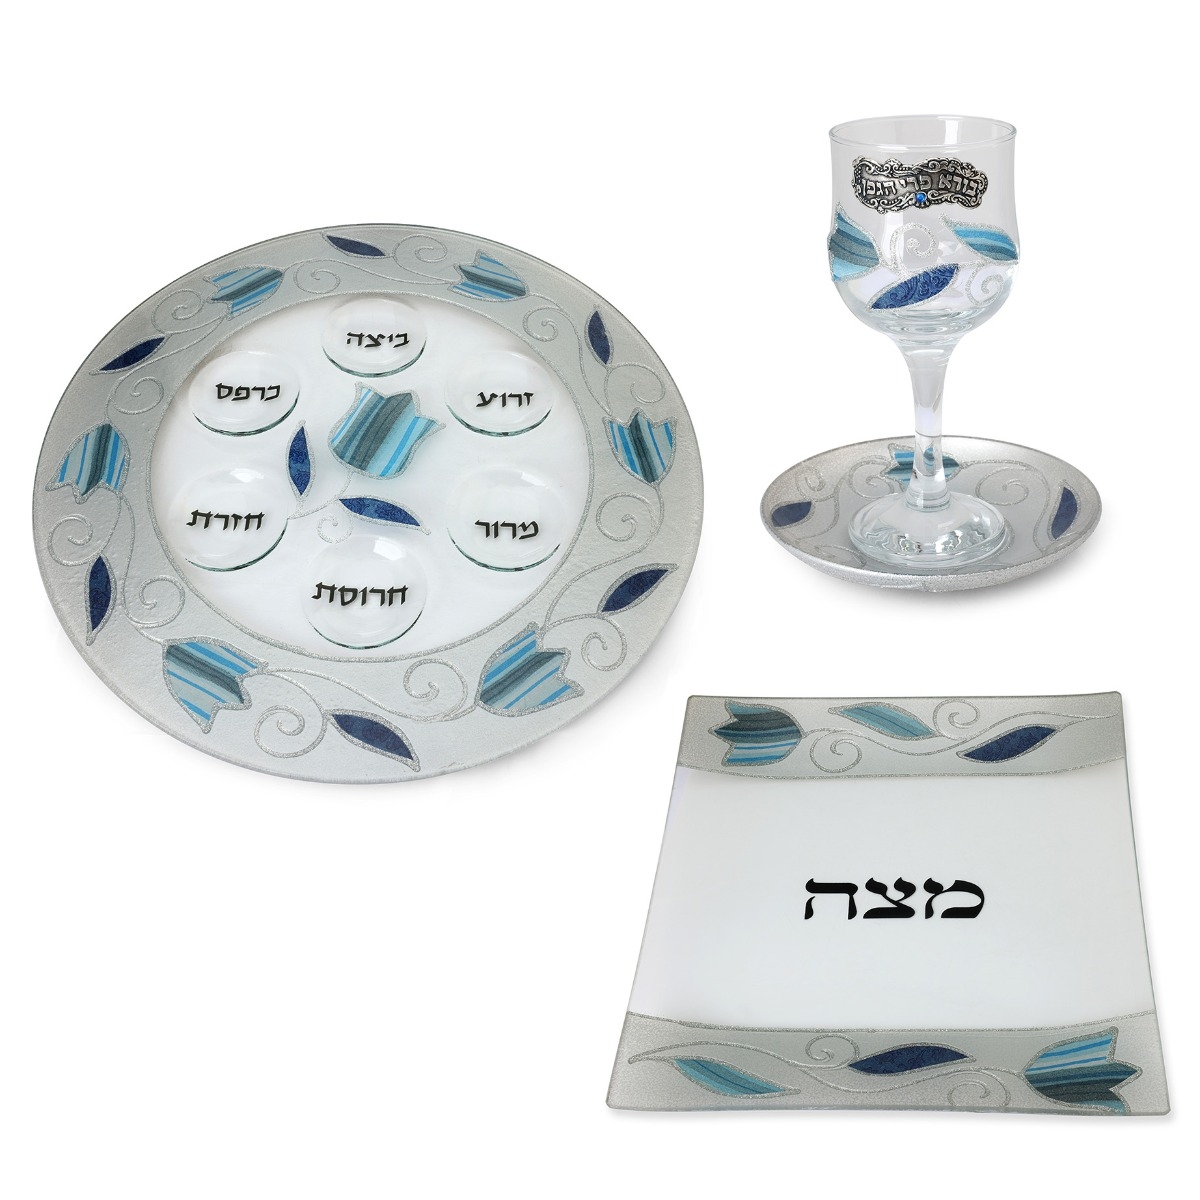 Blue Tulip Passover Essentials Seder Set by Lily Art  - 1